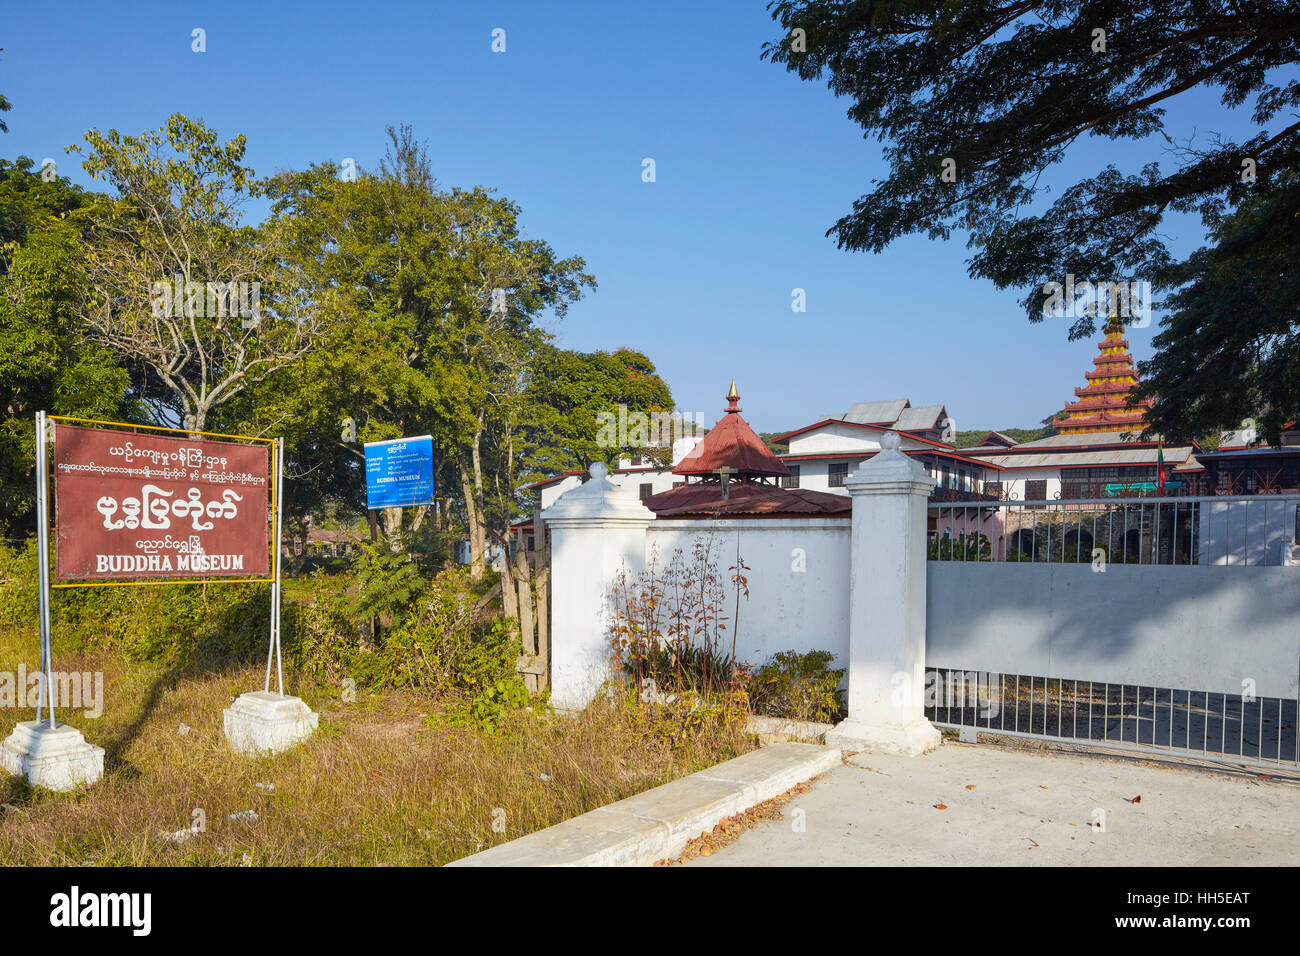 Buddah Museum, Nyaungshwe, Myanmar (Burma) Stock Photo